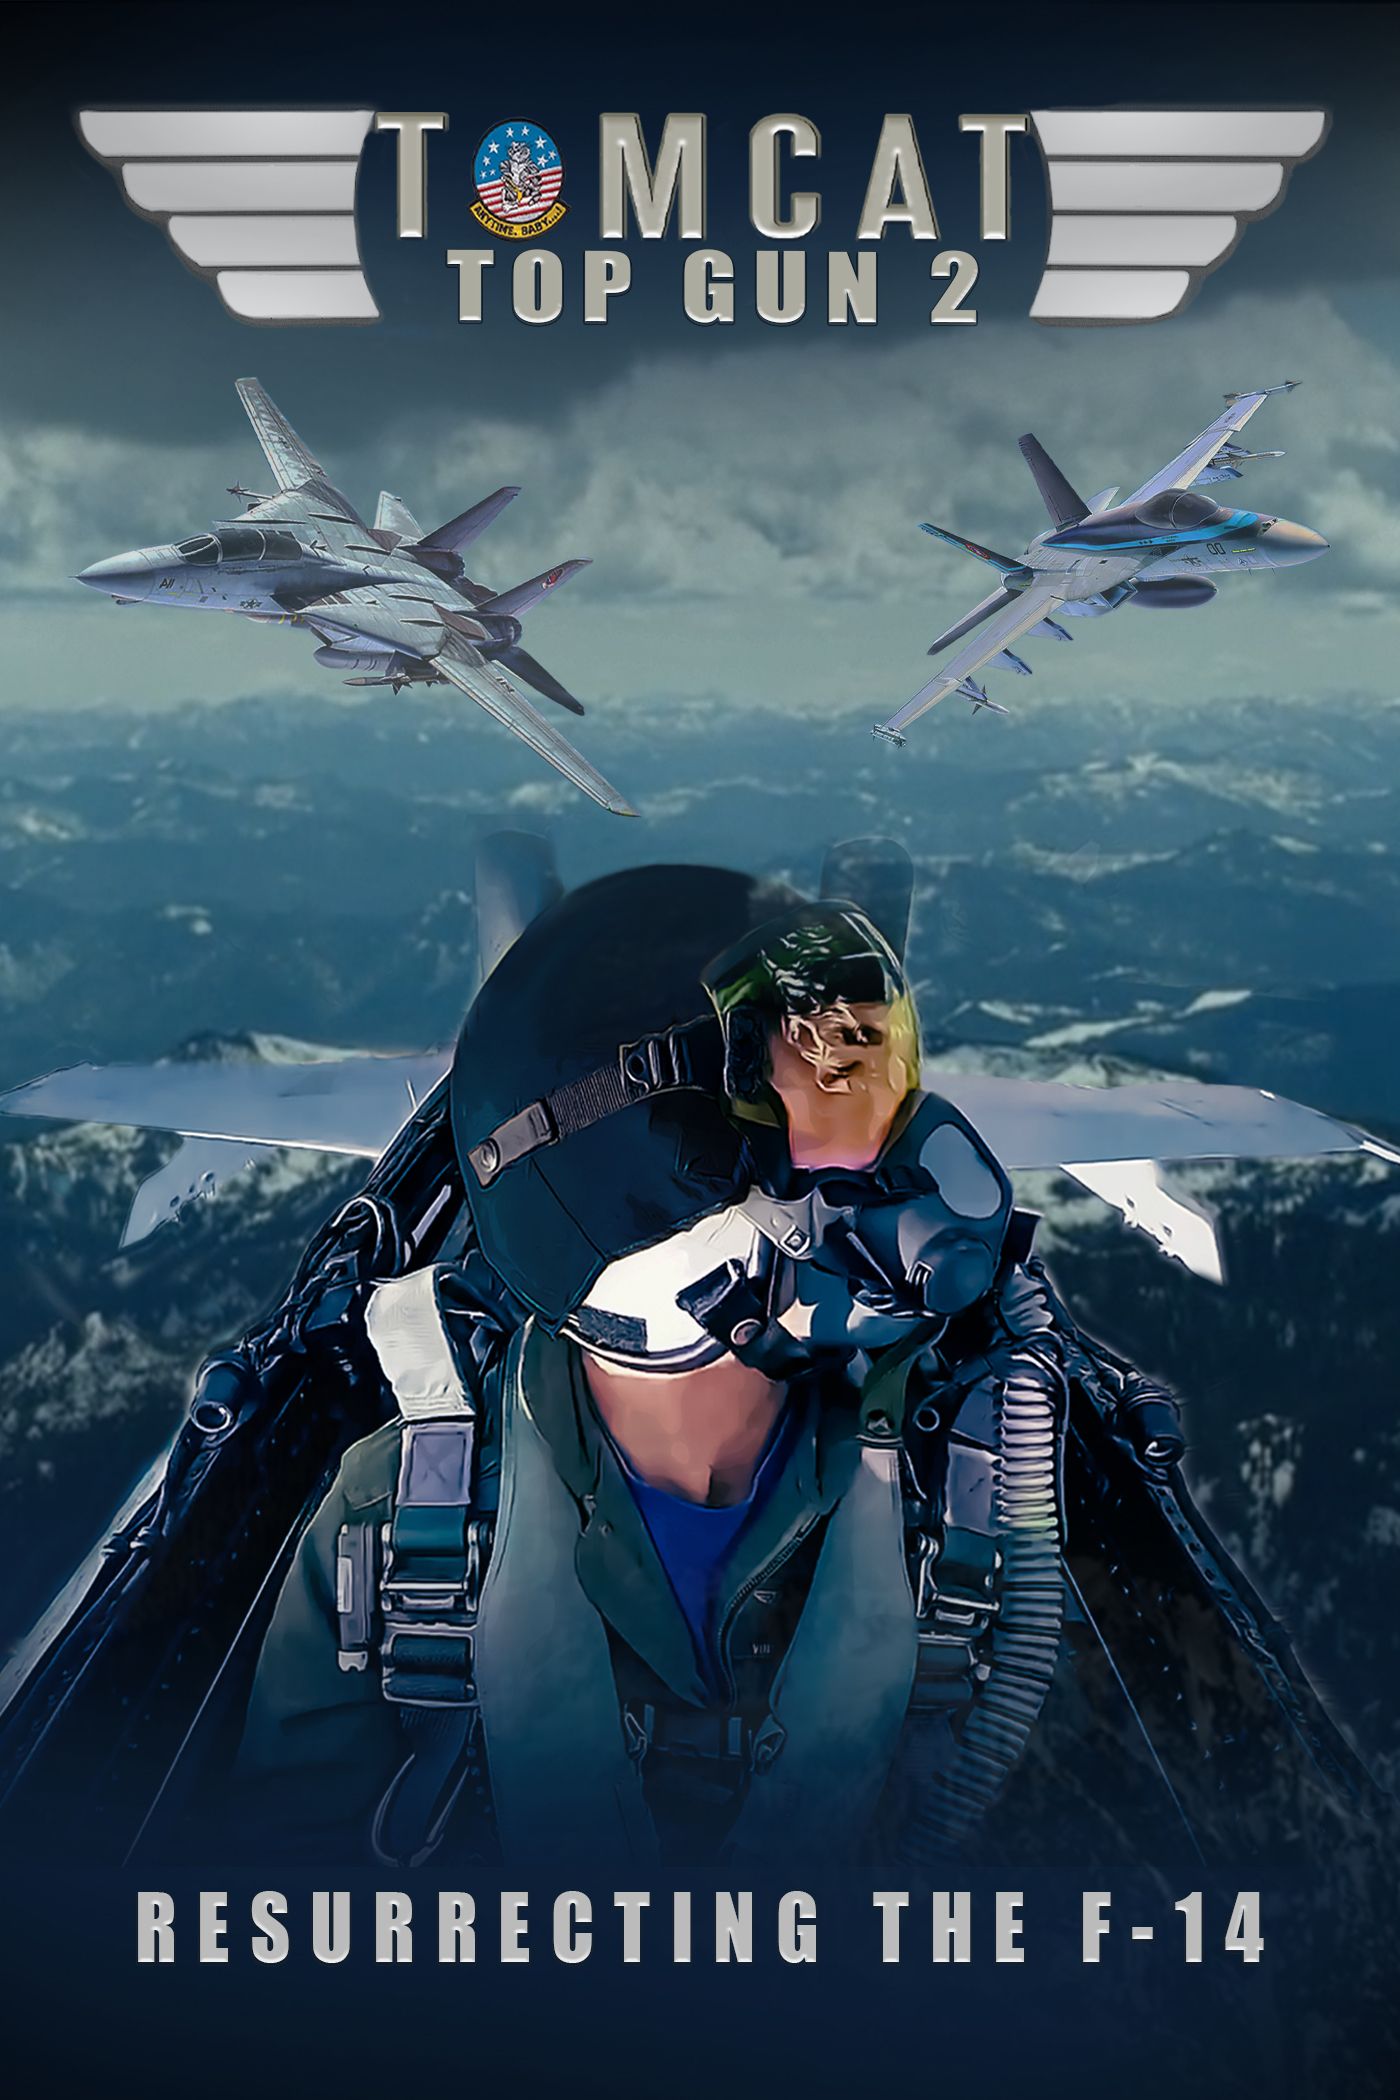 Tomcat: Top Gun 2 Resurrecting the F-14